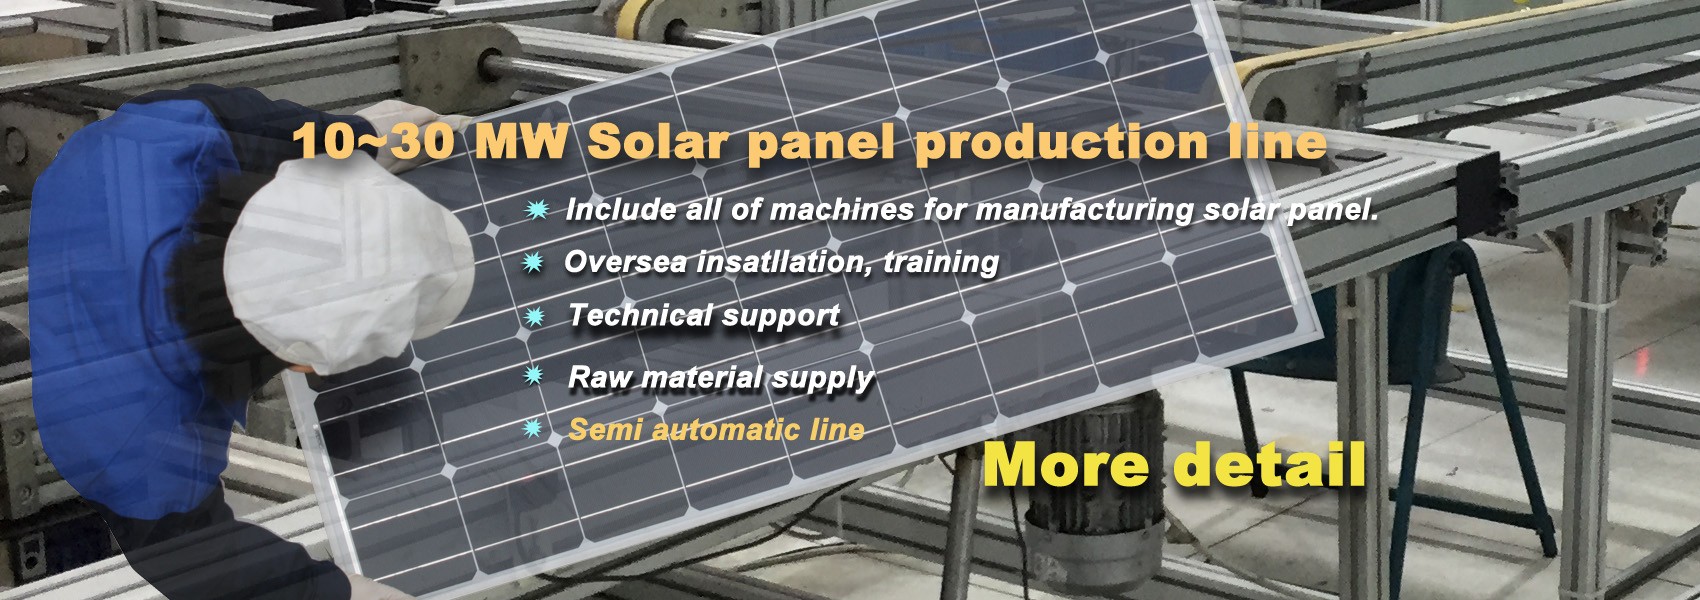 10 MW solar panel production line